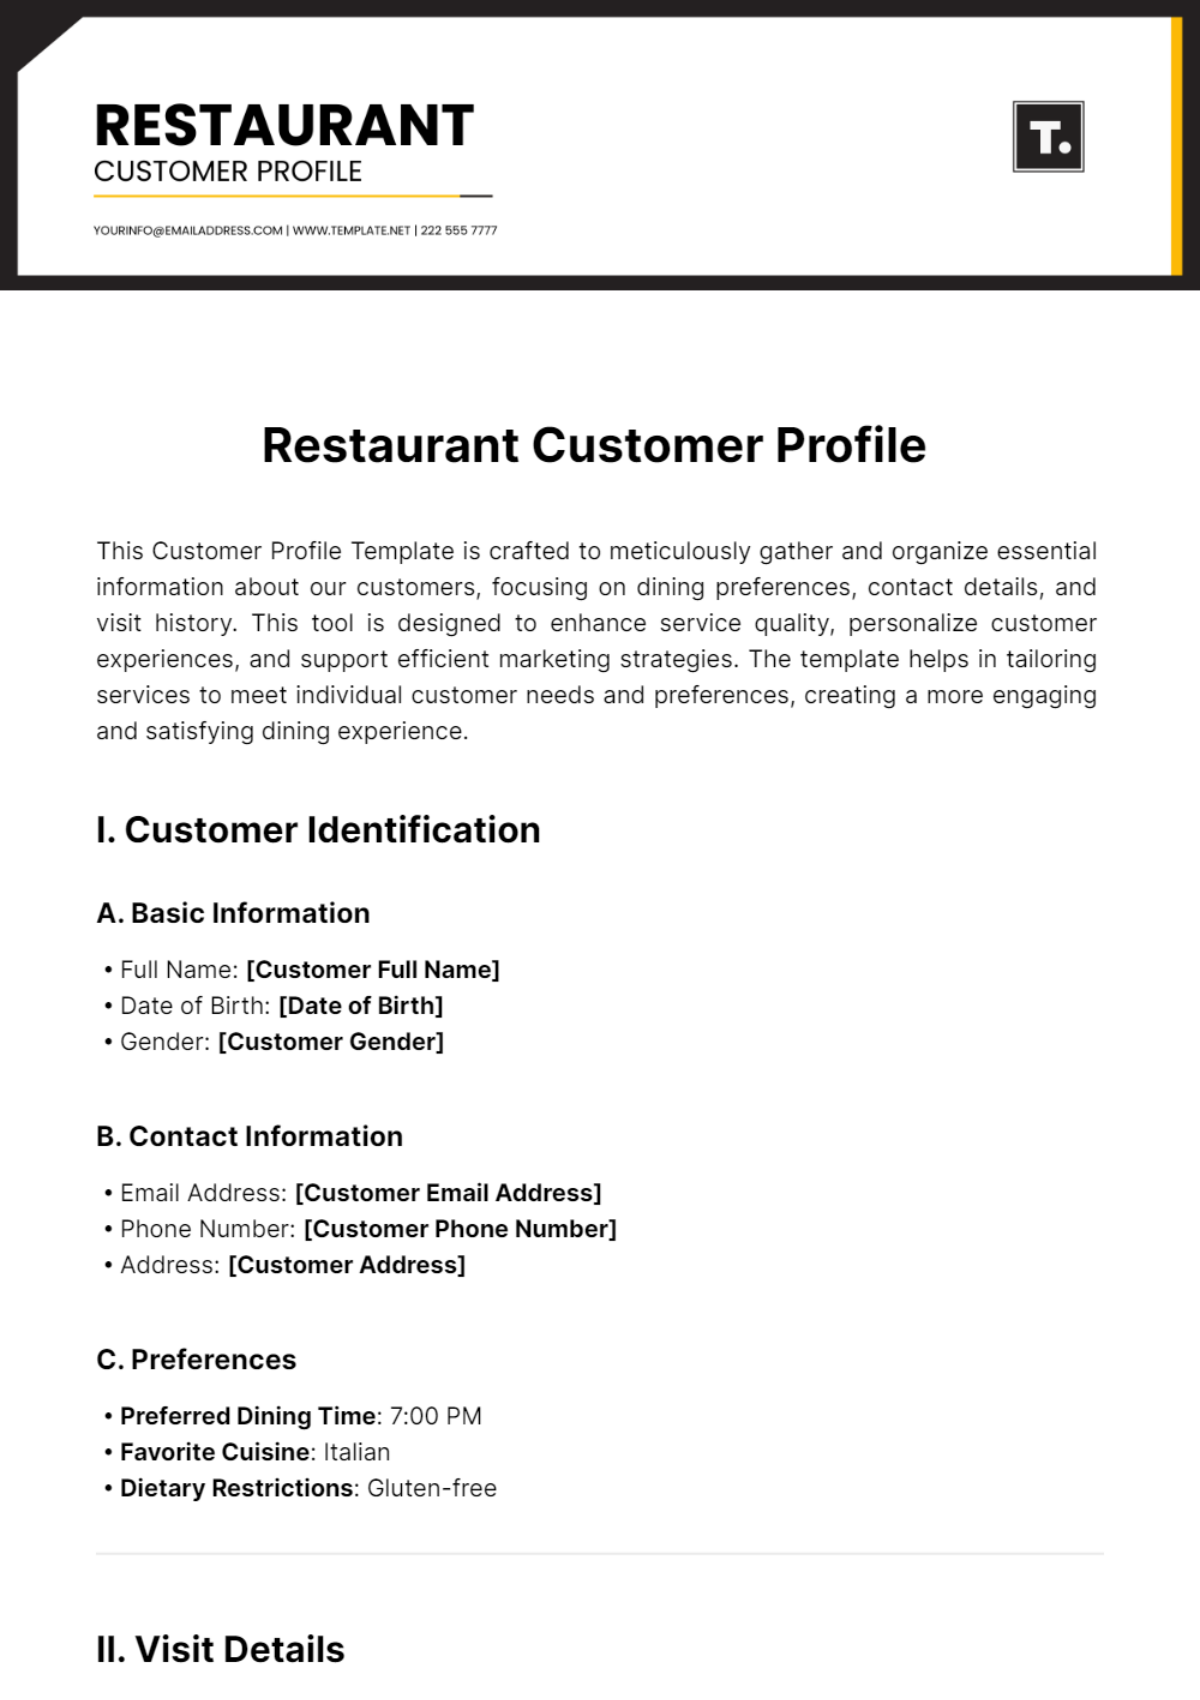 Restaurant Customer Profile Template